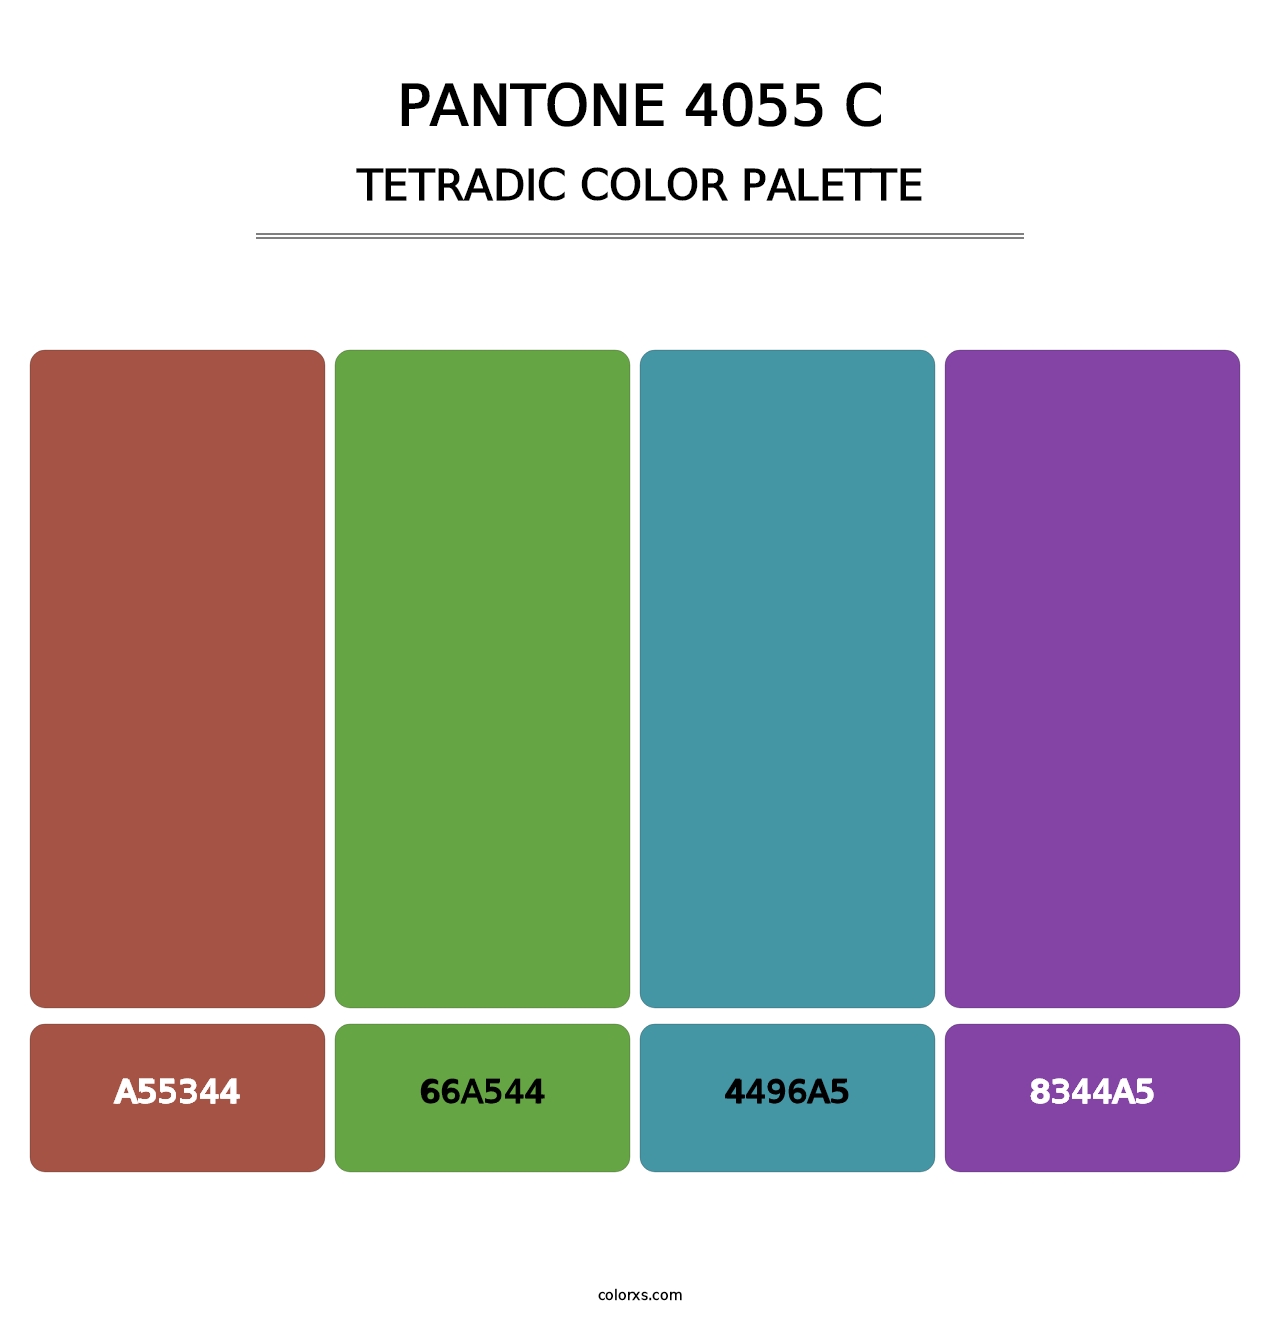 PANTONE 4055 C - Tetradic Color Palette